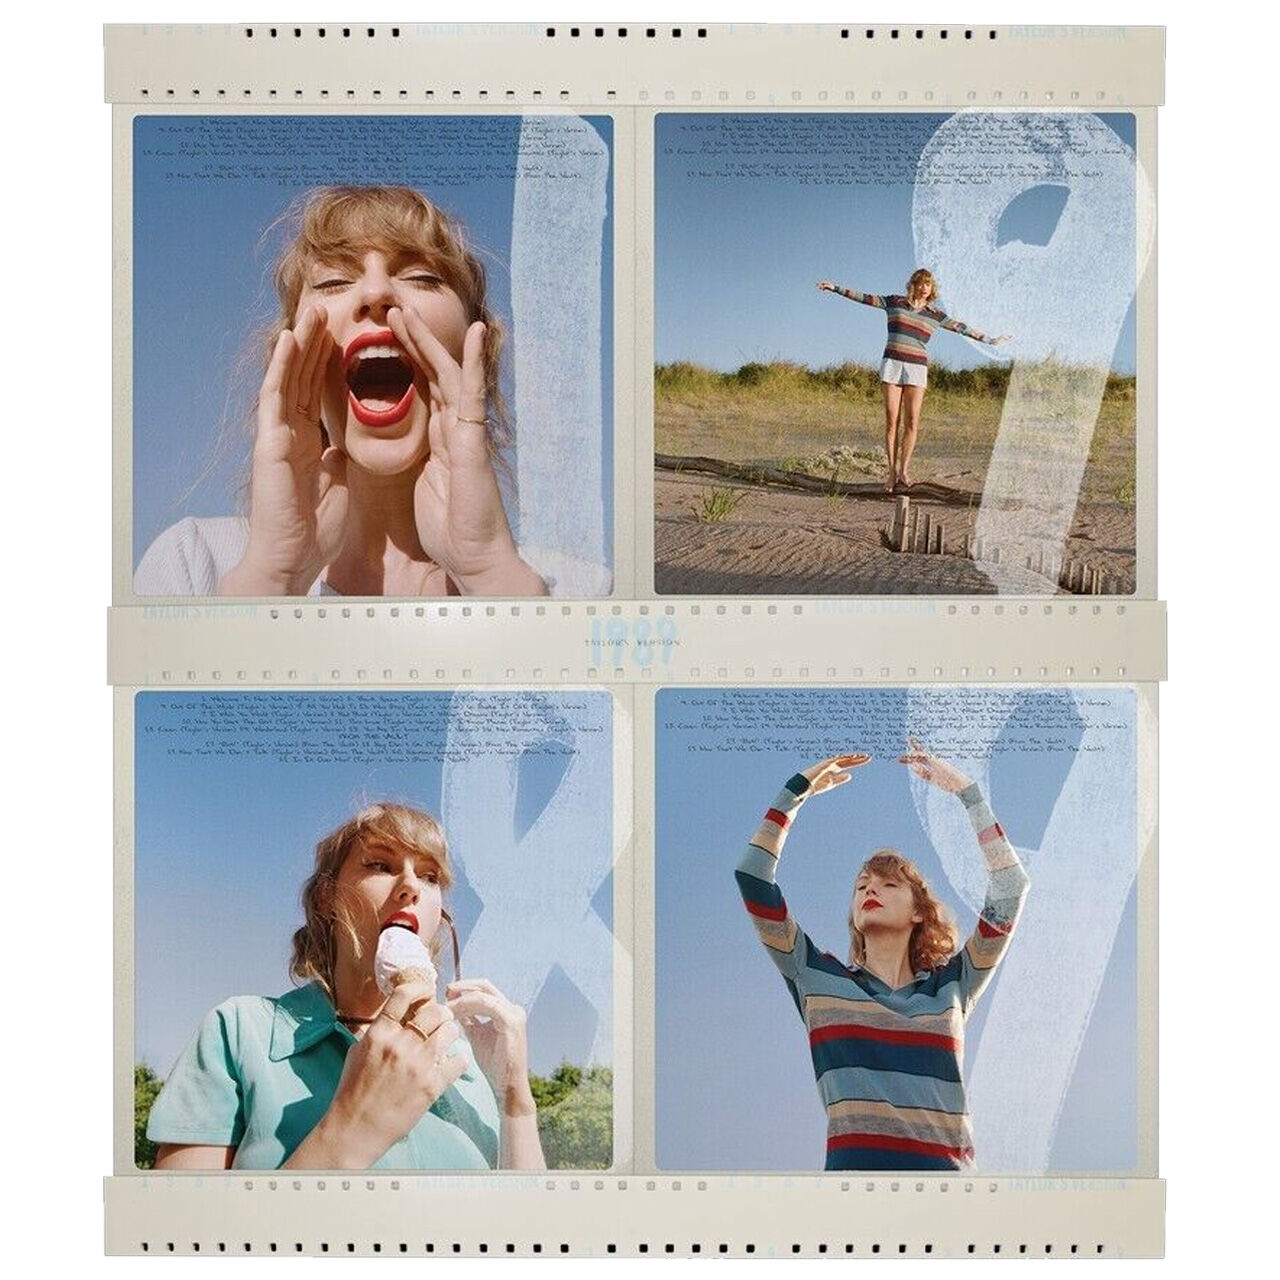 Mini Vinyl 1989 Taylor Swift 